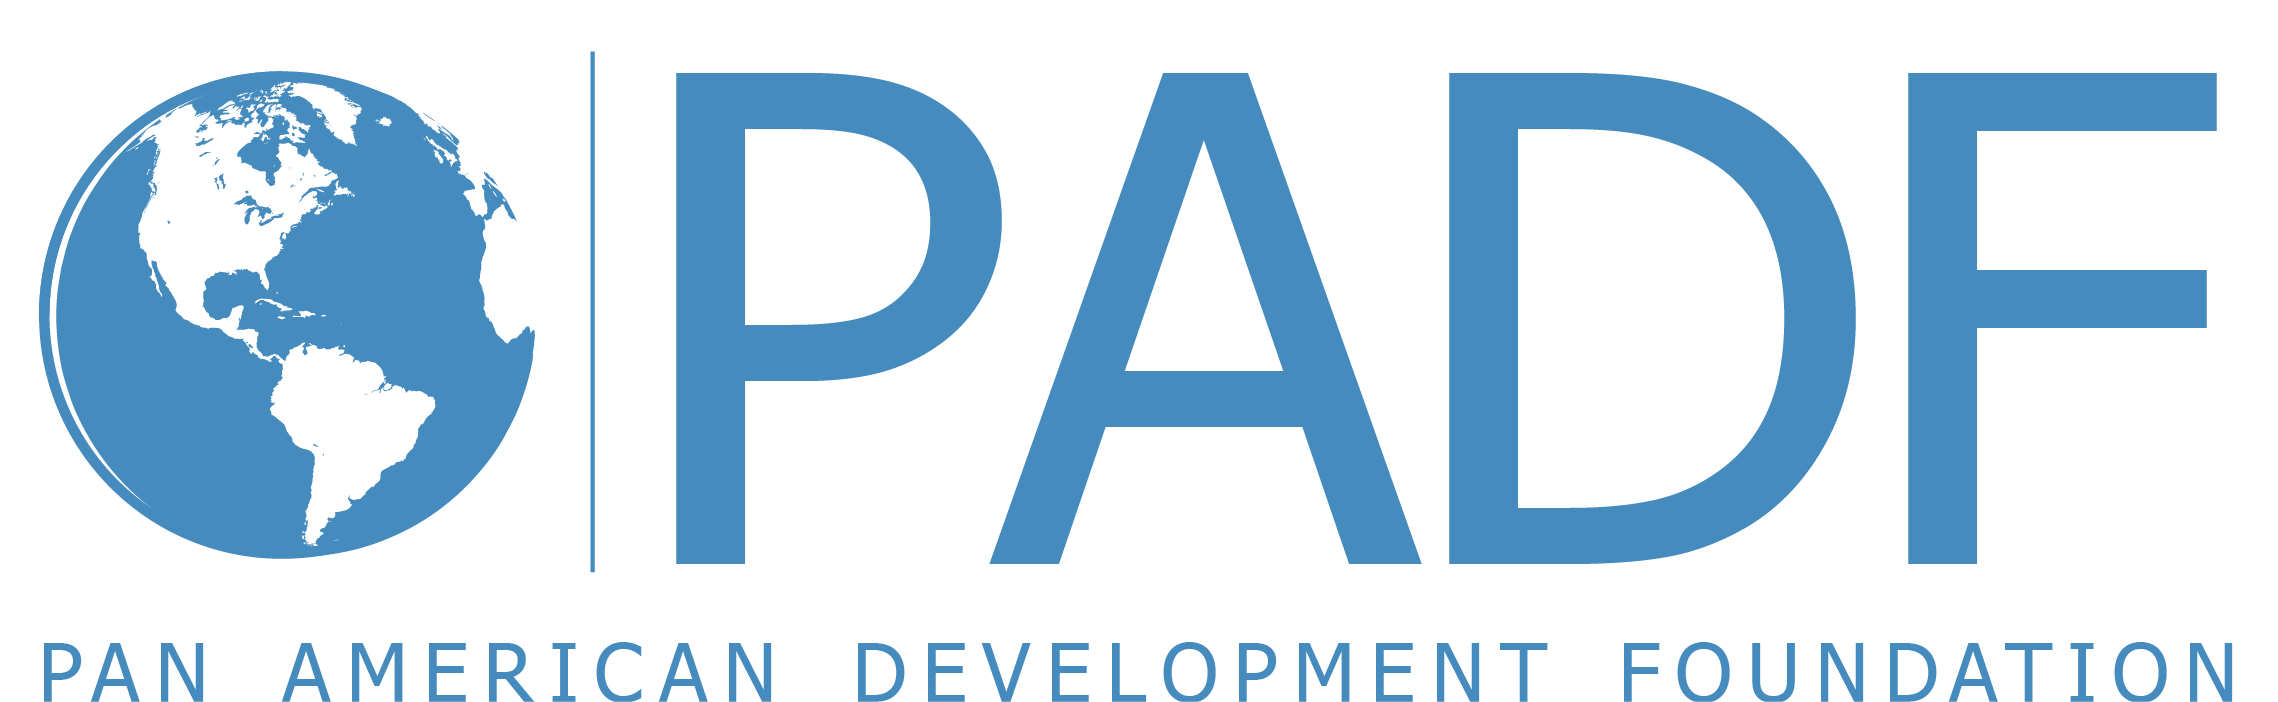 Blue Pan American Development Foundation logo